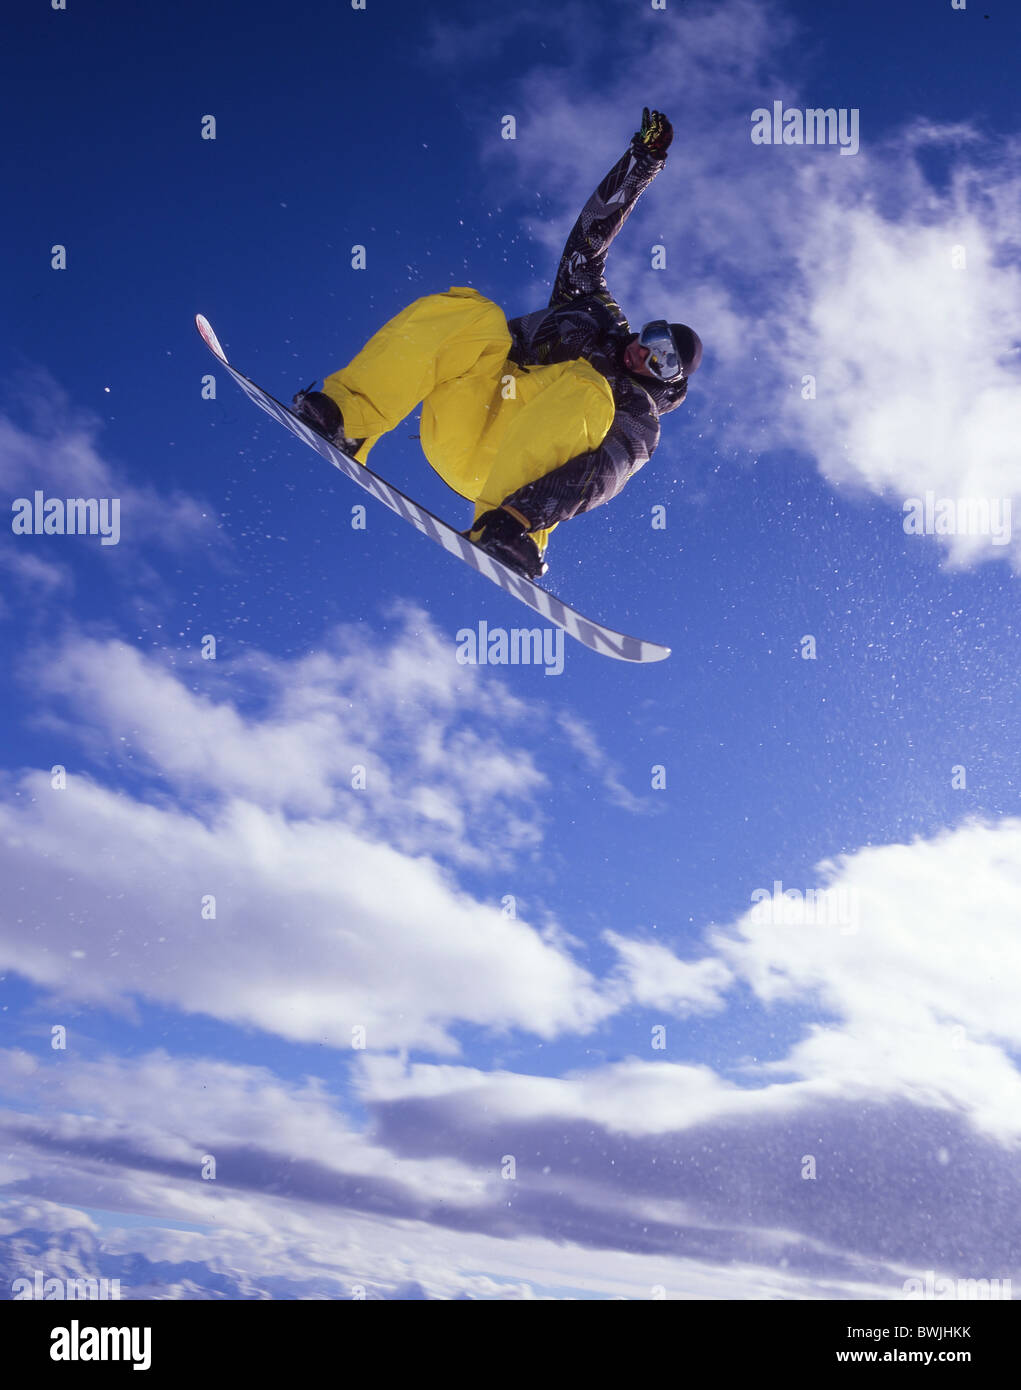 Snowboarder jump action sky snowboard Snowboarding winter sports winter mountains Alps Glacier 3000 Les Dia Stock Photo